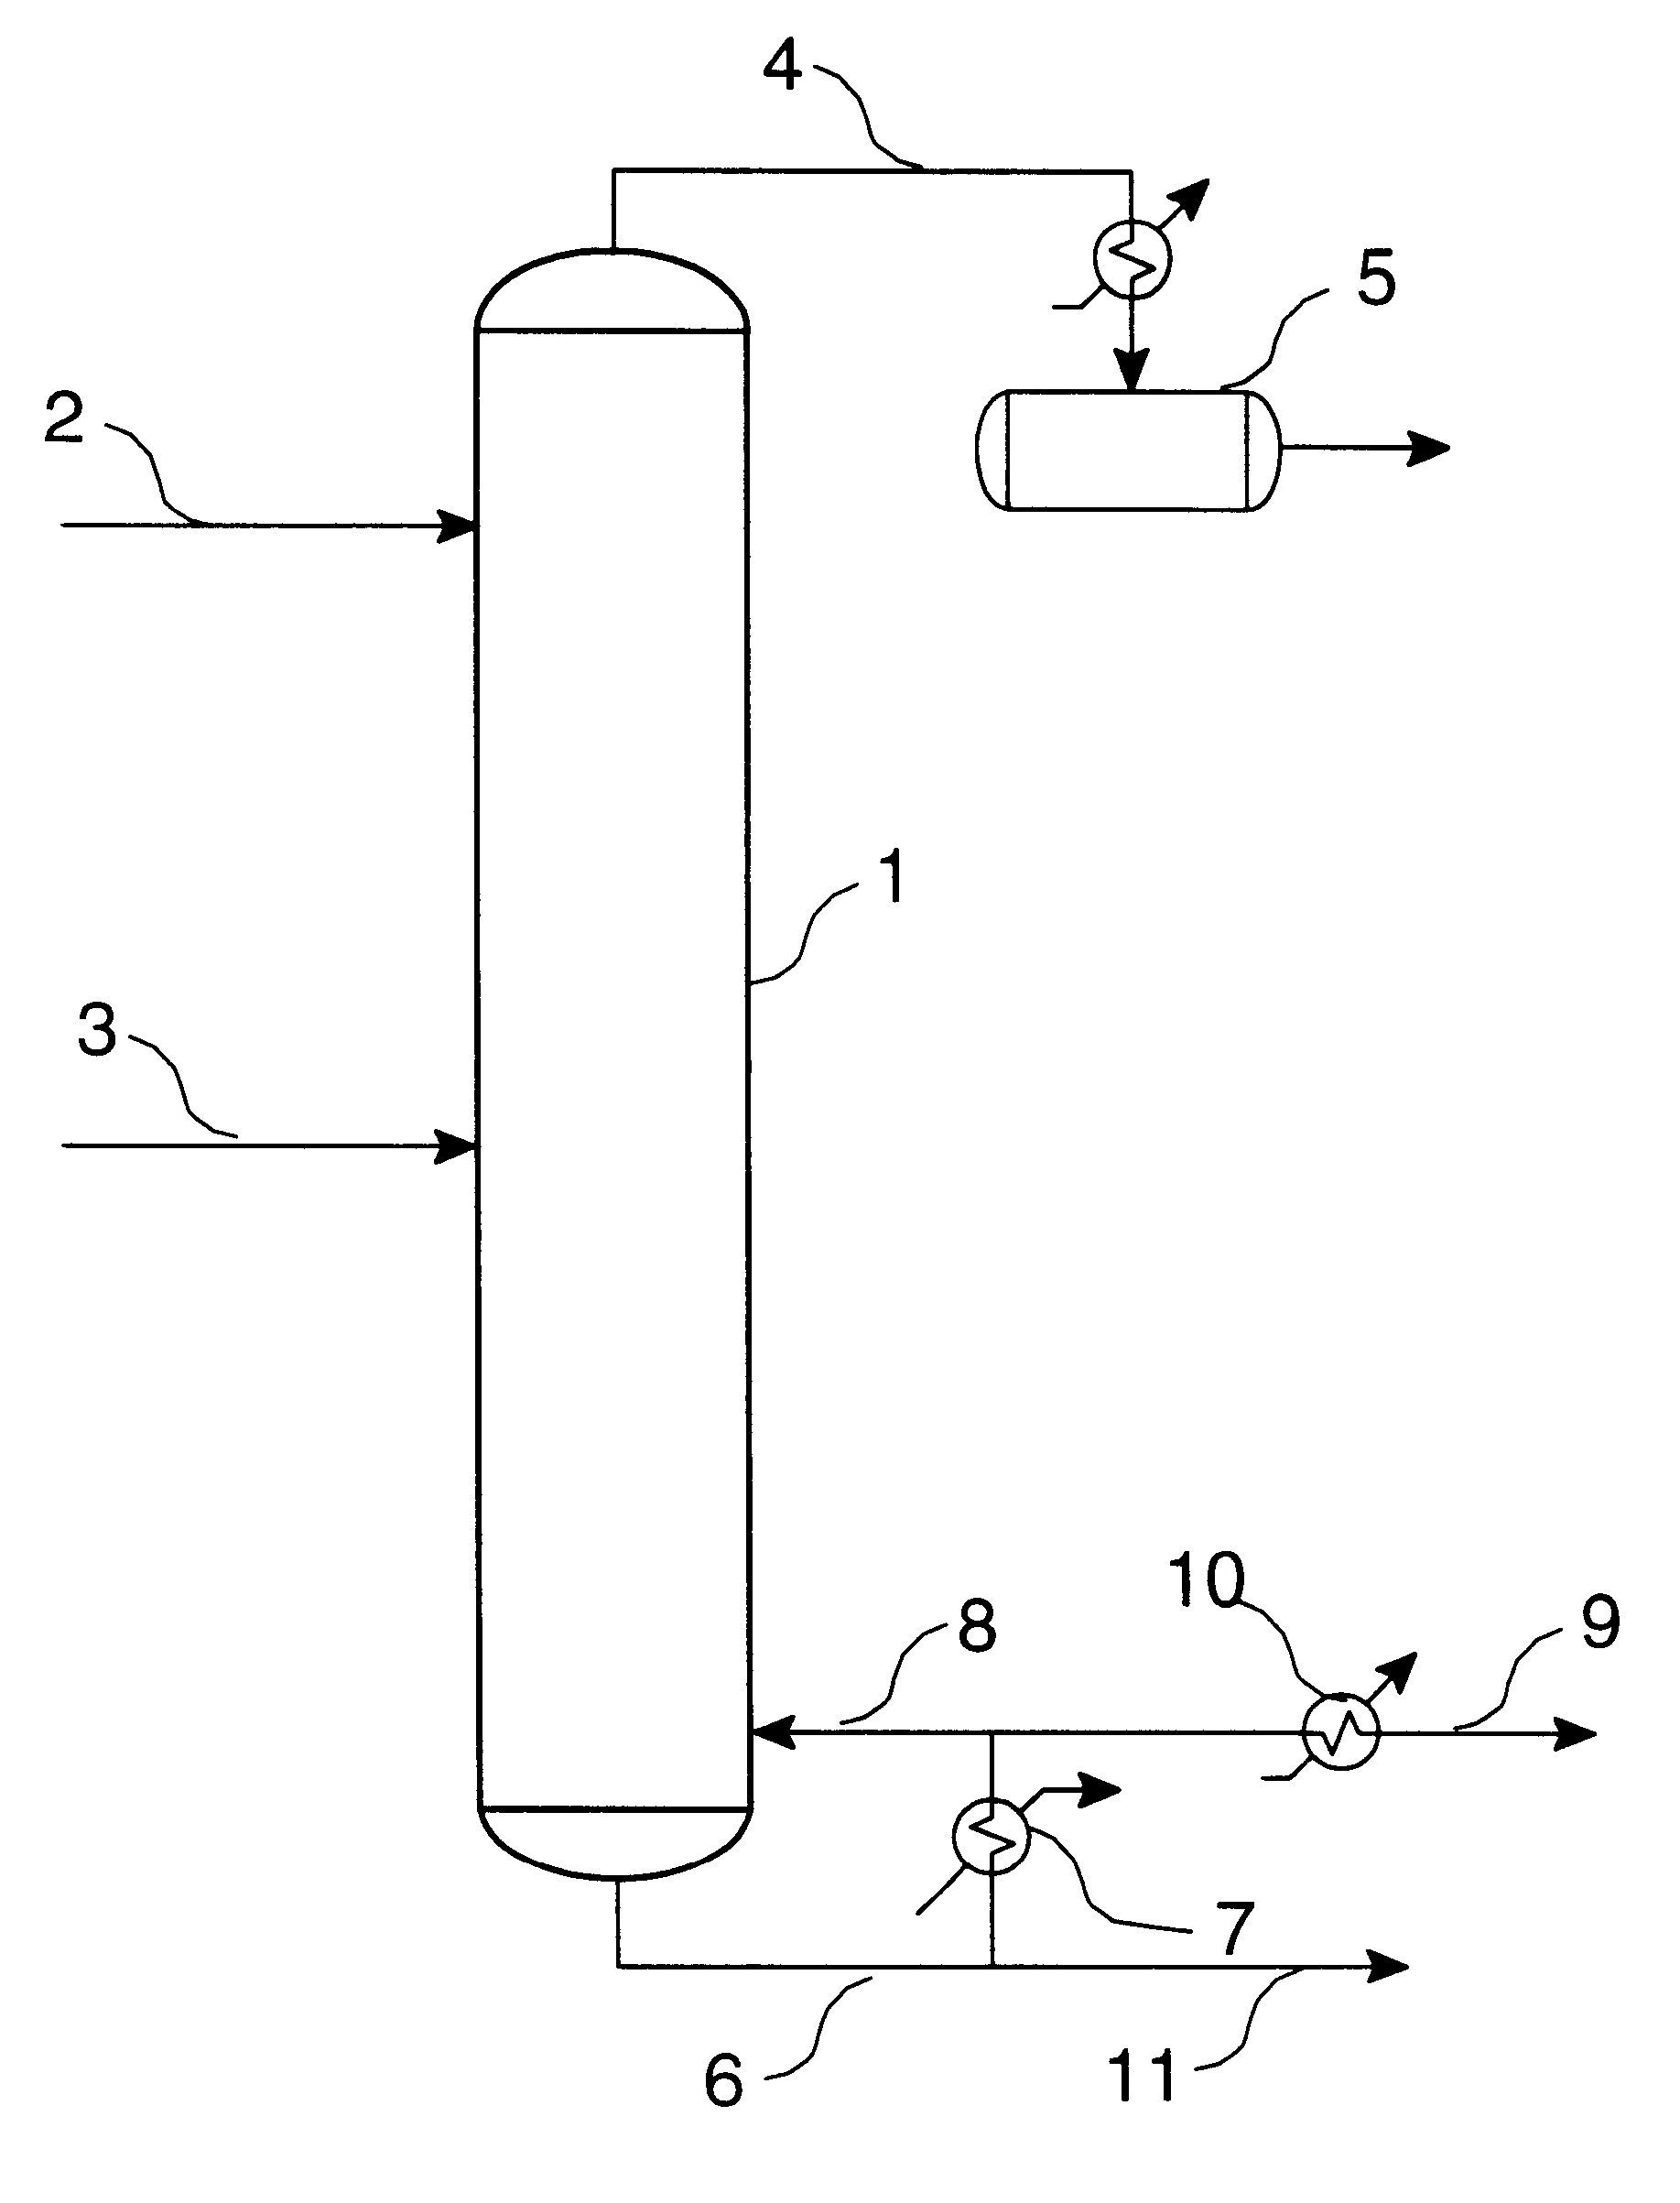 Impurities separation by distillation